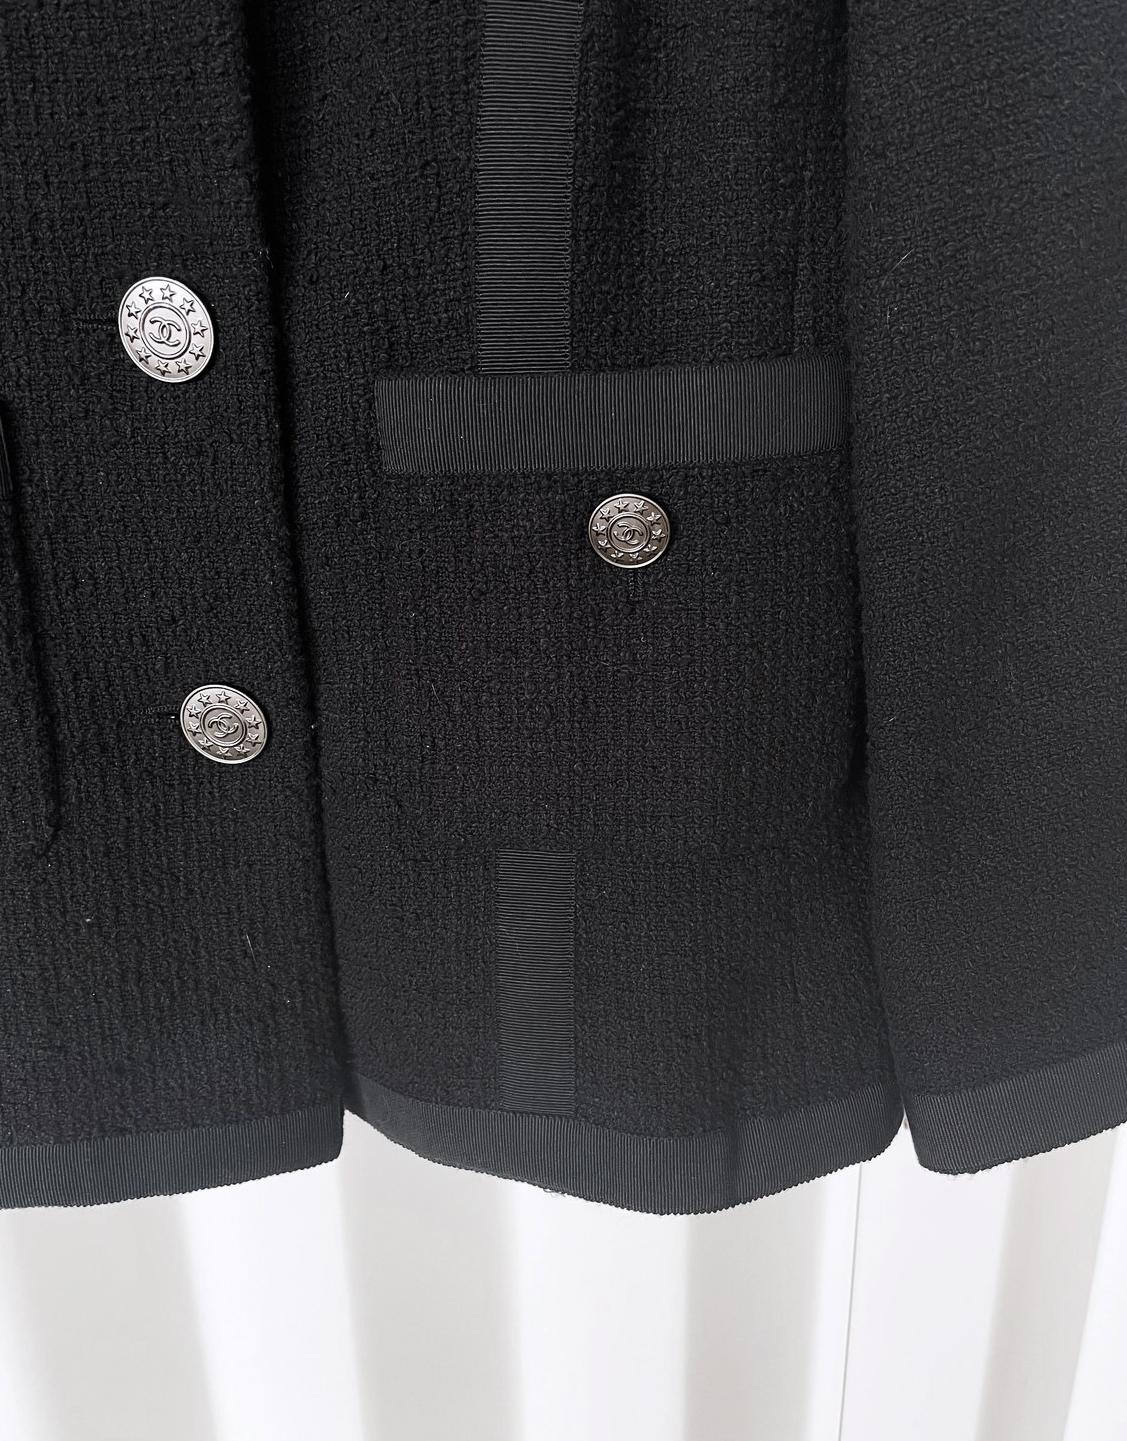 Chanel Timeless Black Tweed Jacket 1